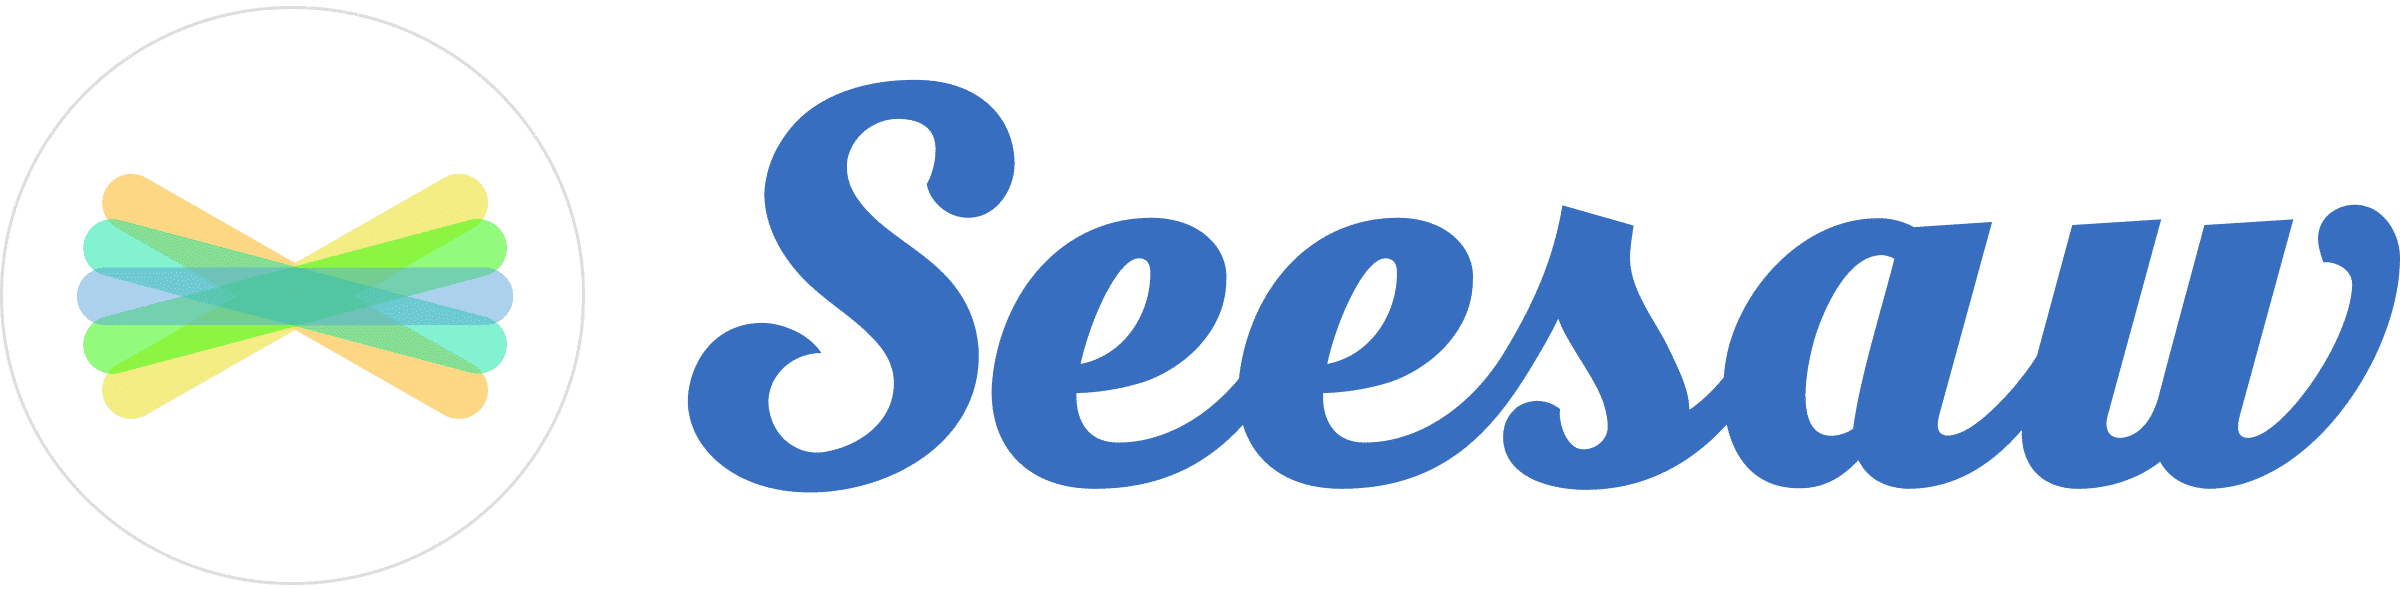 Seesaw Learning - Crunchbase Company Profile & Funding